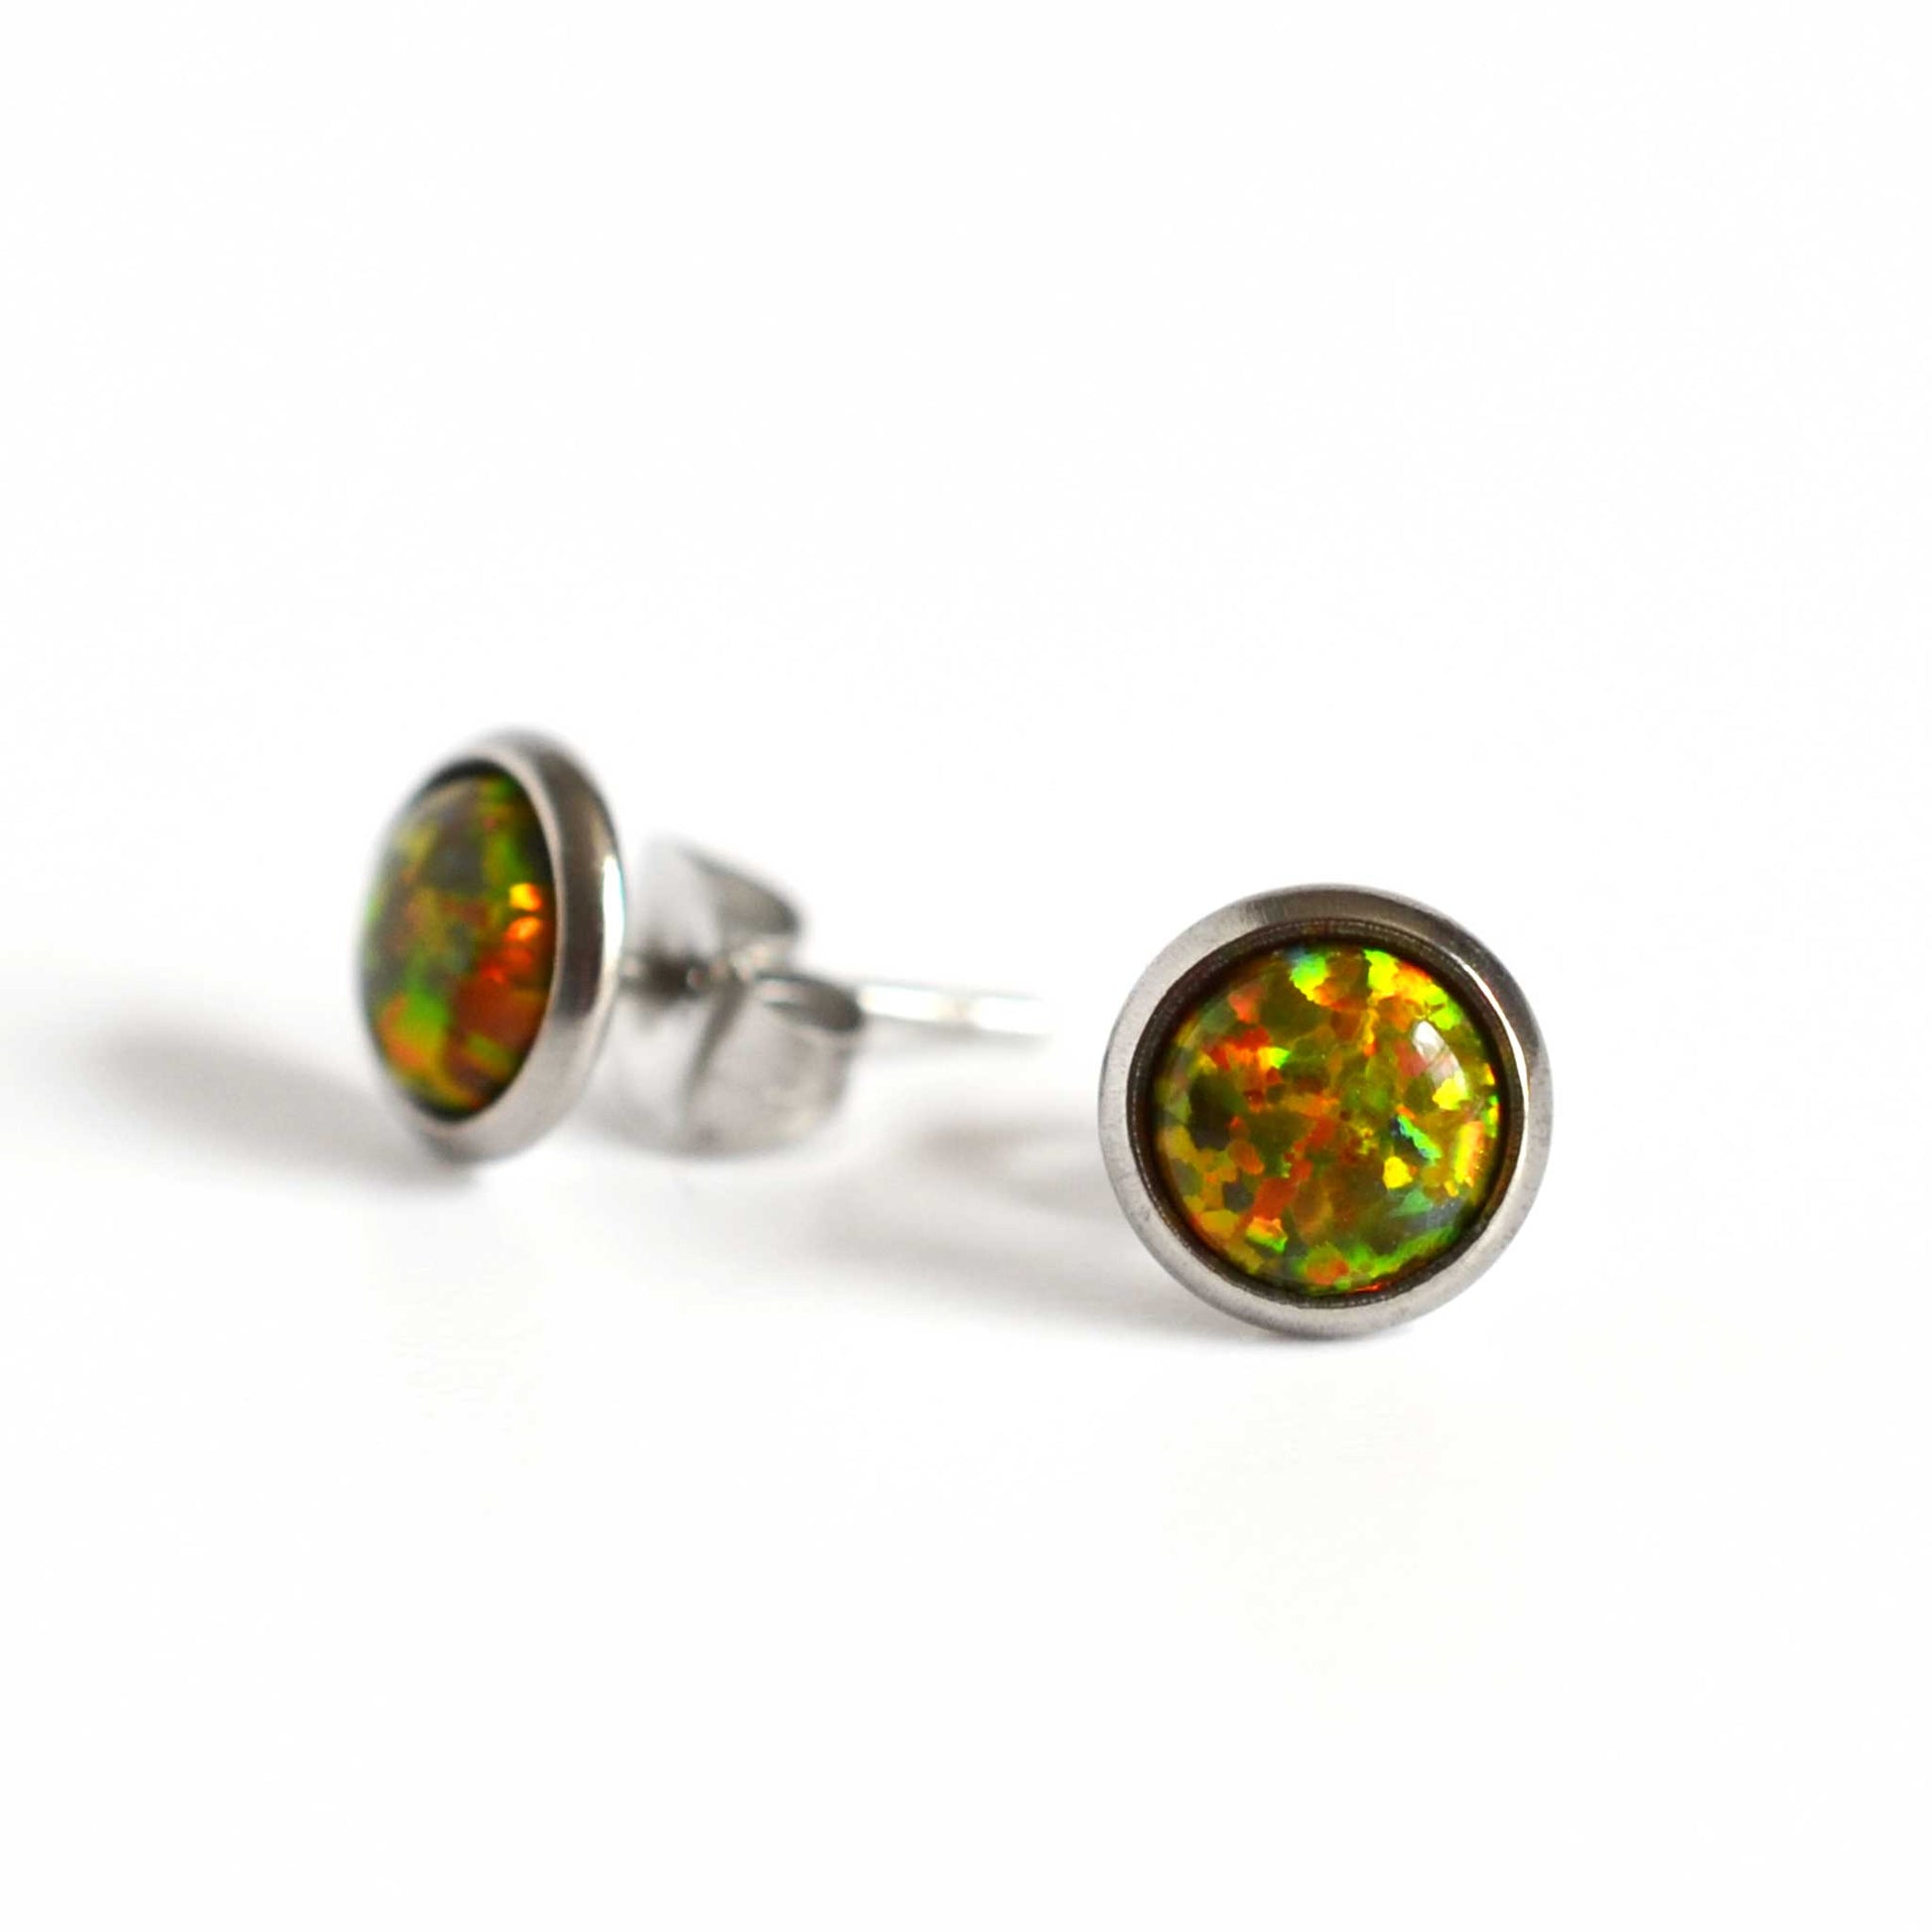 Dark green Opal stud earrings on white background